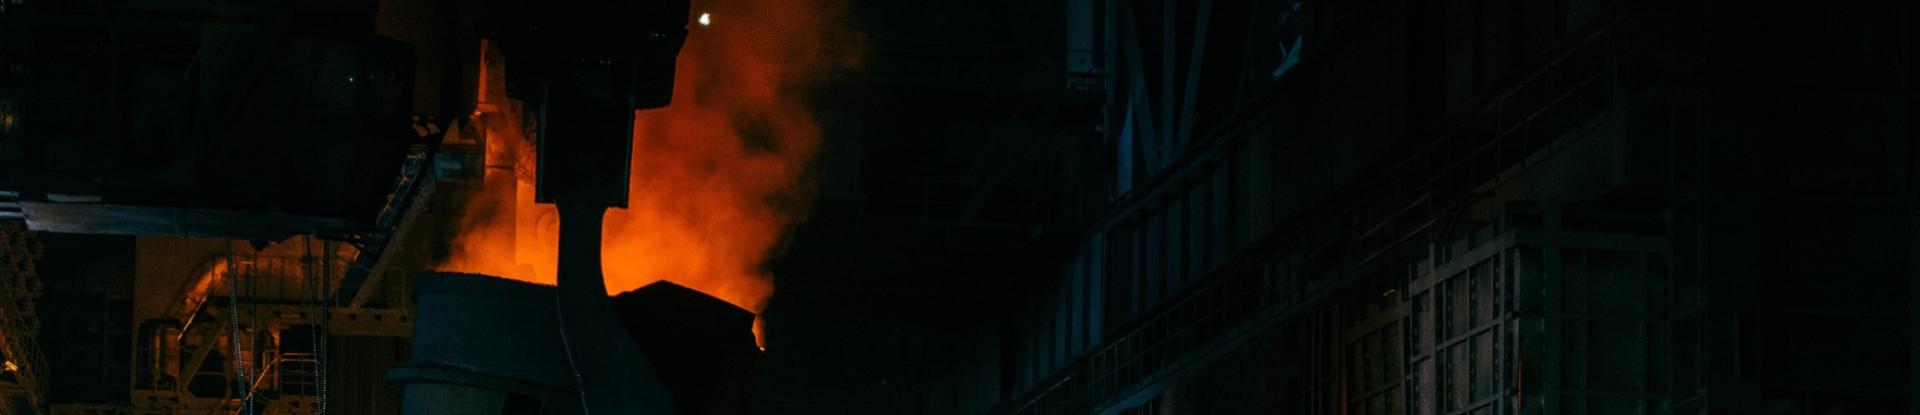 industrial fire